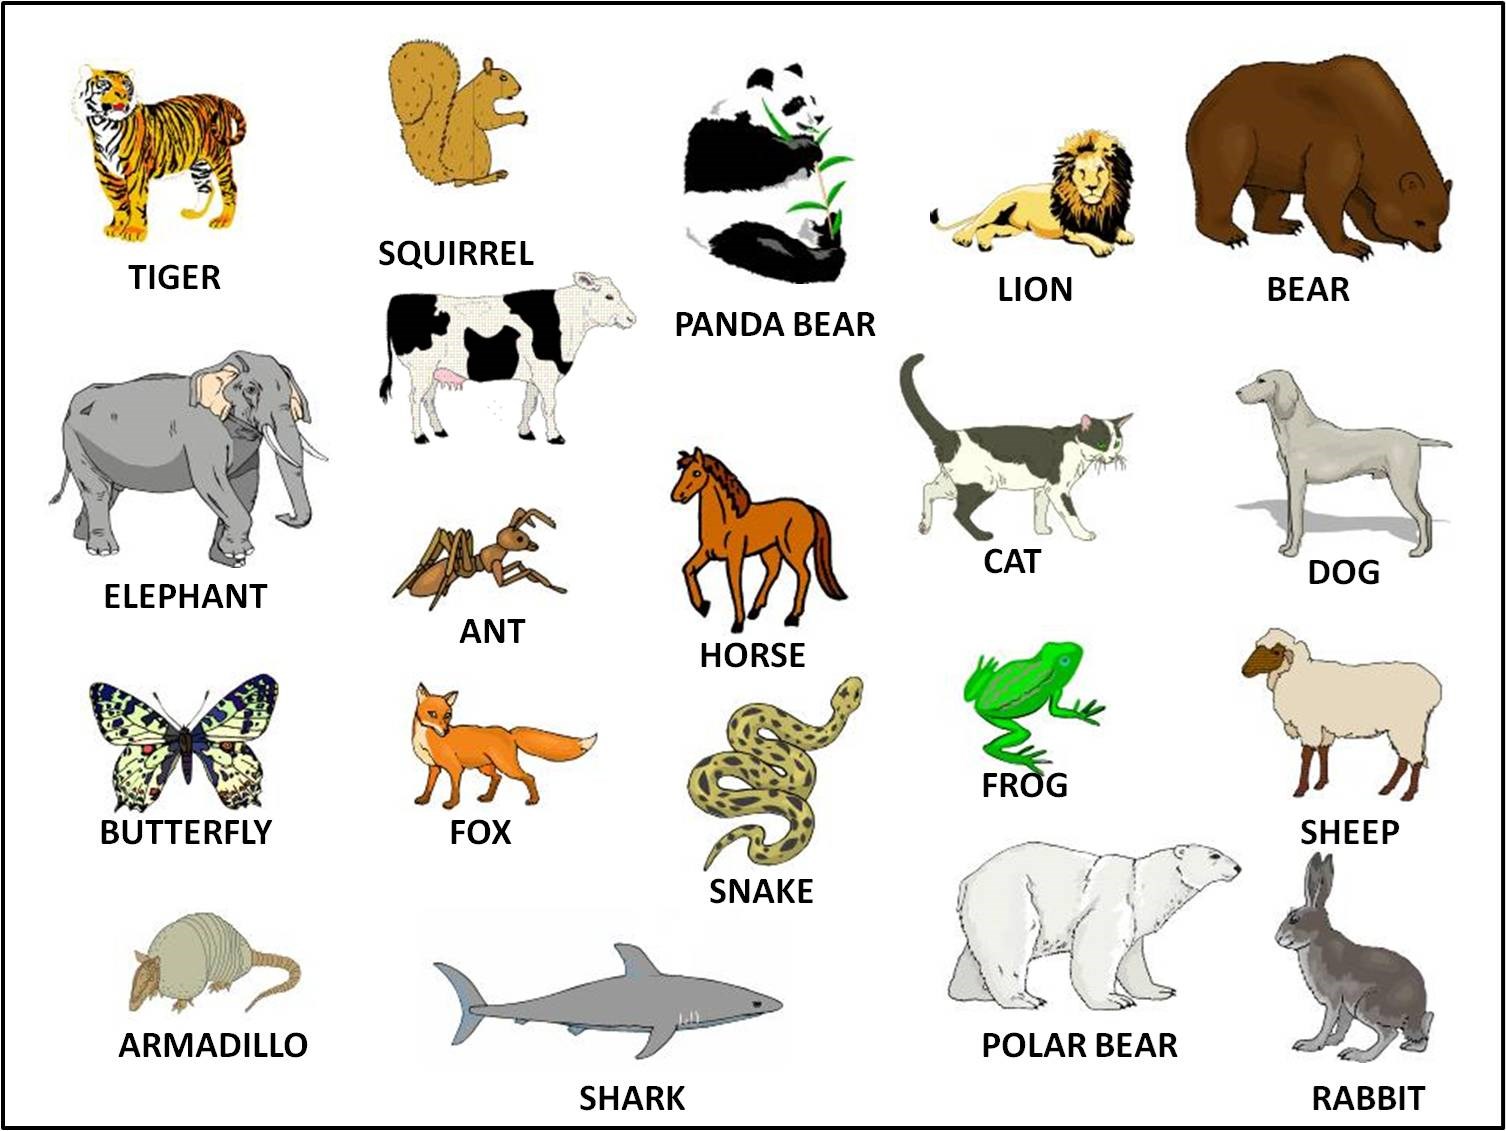 Английский 2 класс тема животных. Английский язык тема животные. Дикие животные на английском. Животные на английском для детей. Дети животных названия.